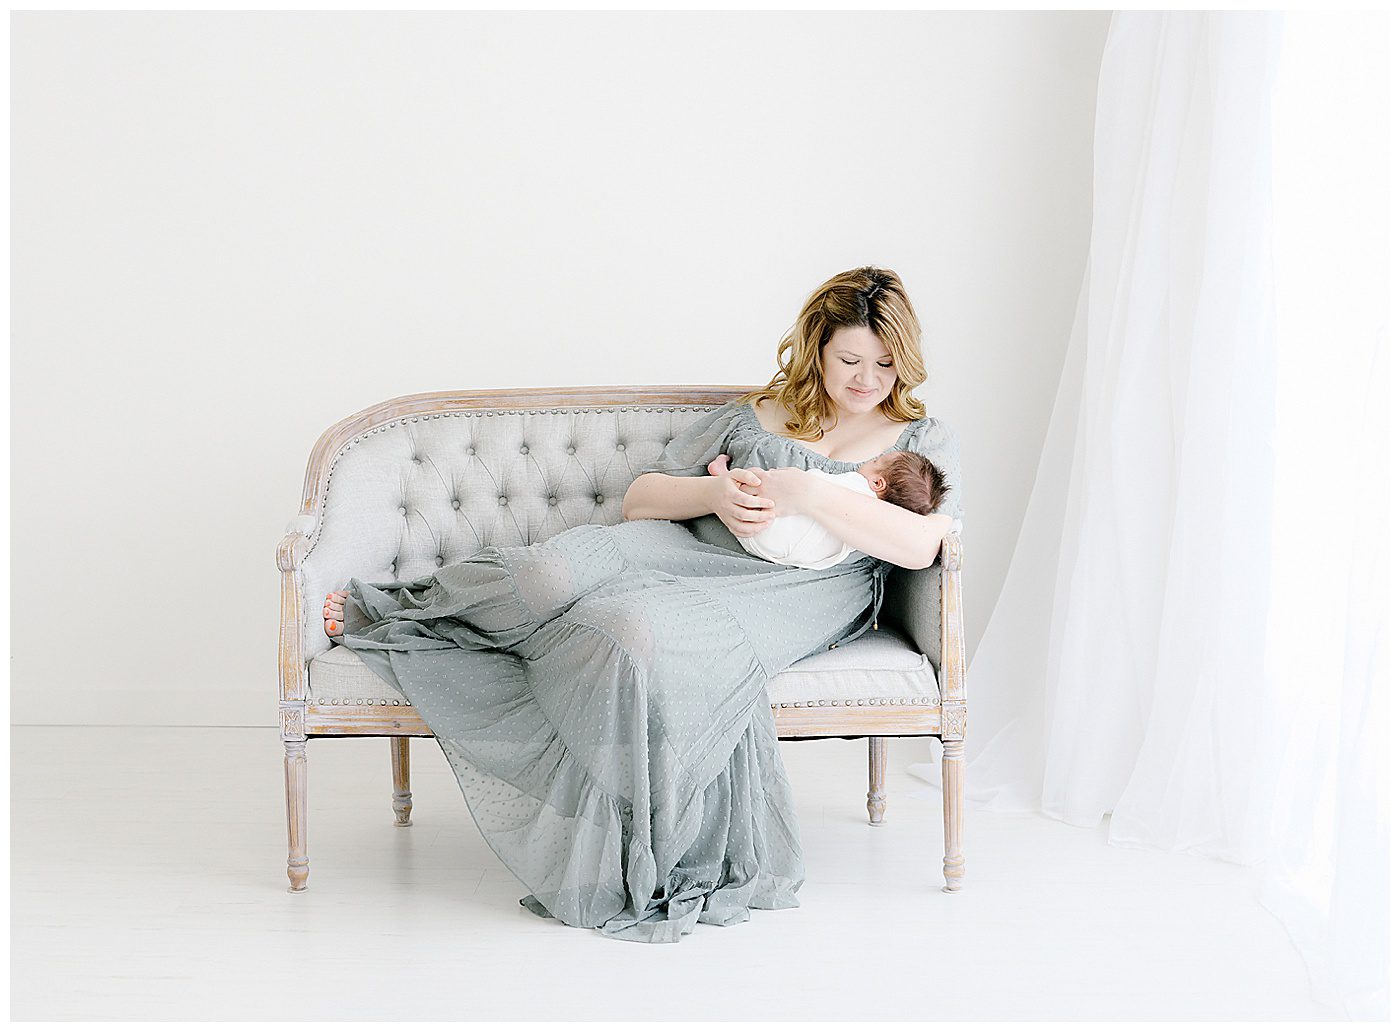 Mom in blue vici dress holding newborn baby boy on settee